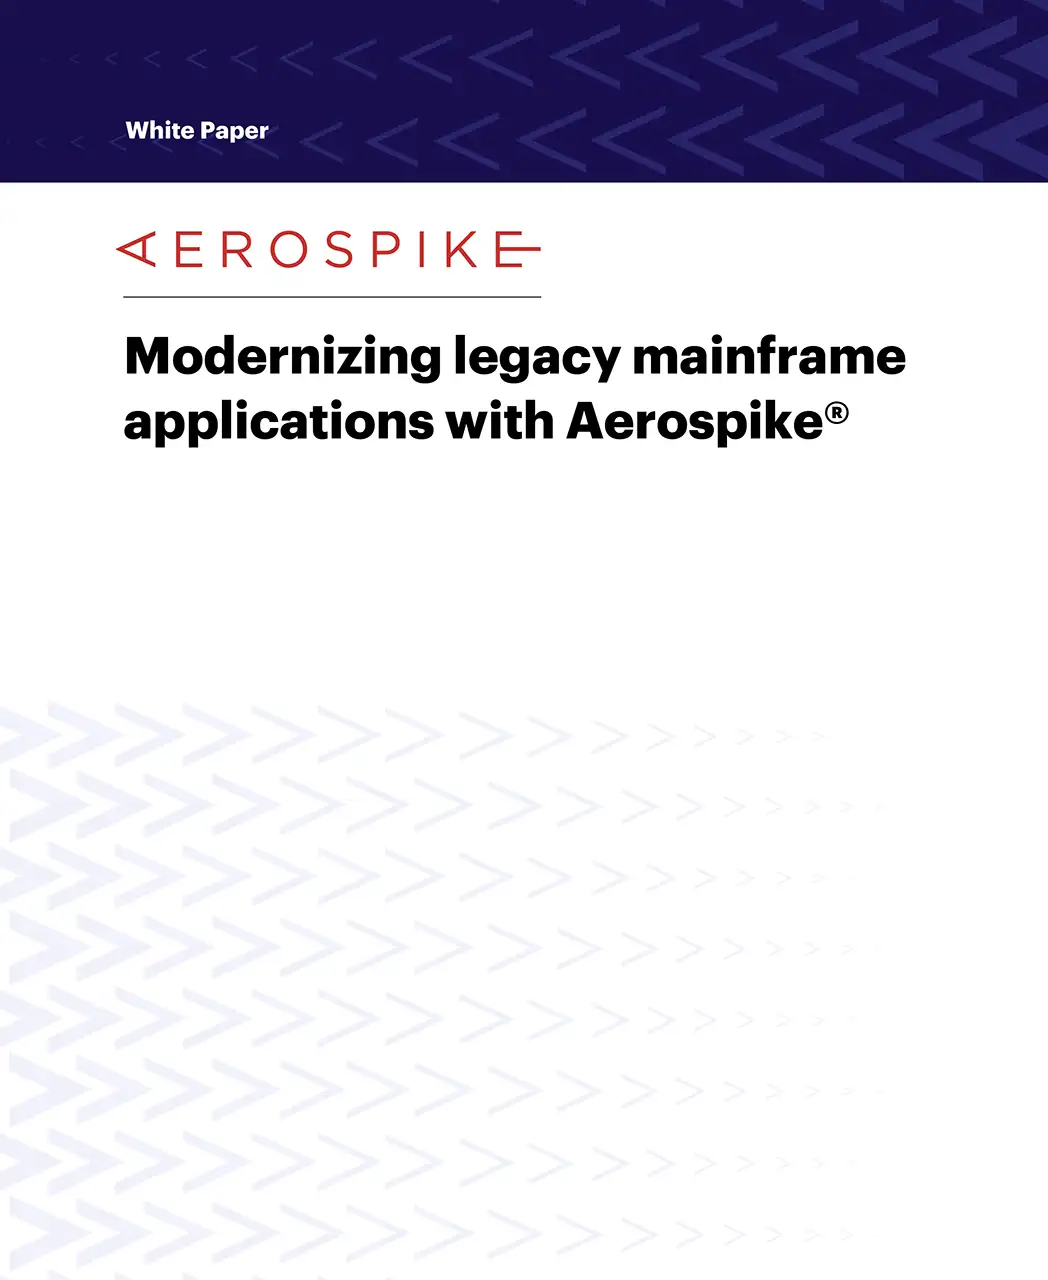 Modernizing legacy mainframe applications with Aerospike